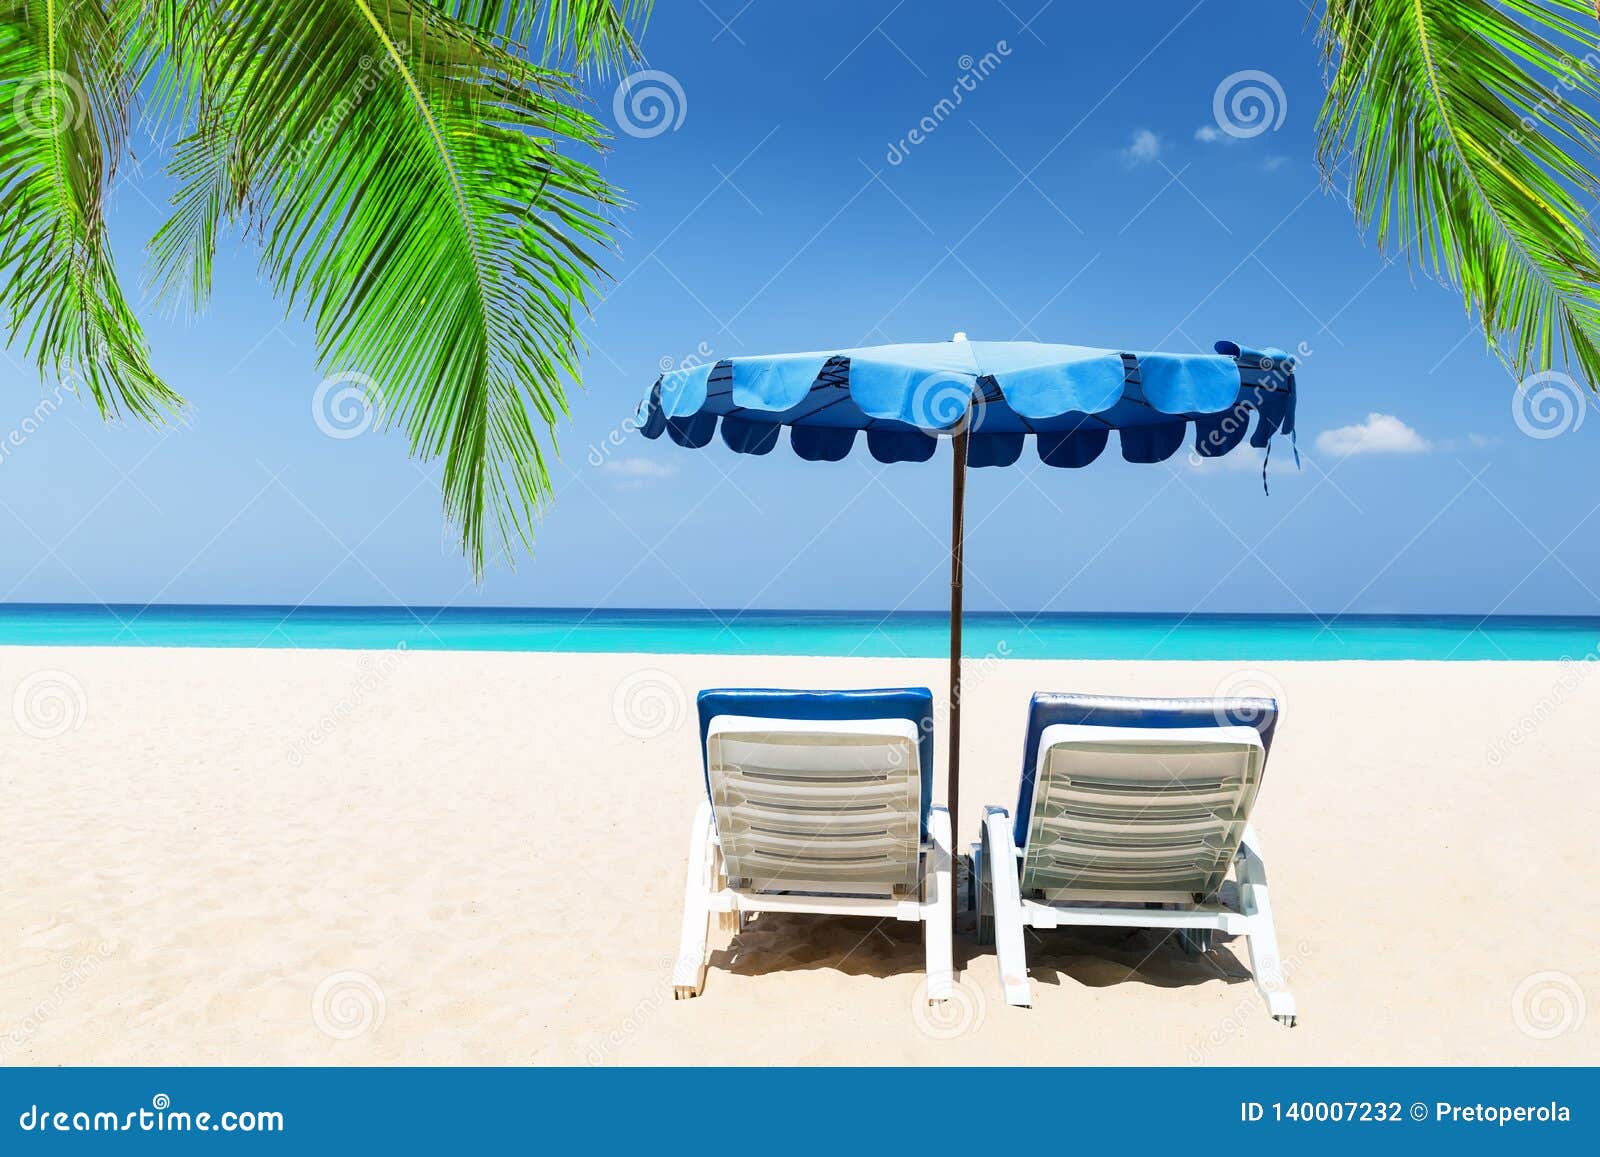 Beach Chairs With Umbrella Stock Photo Image Of Island 140007232